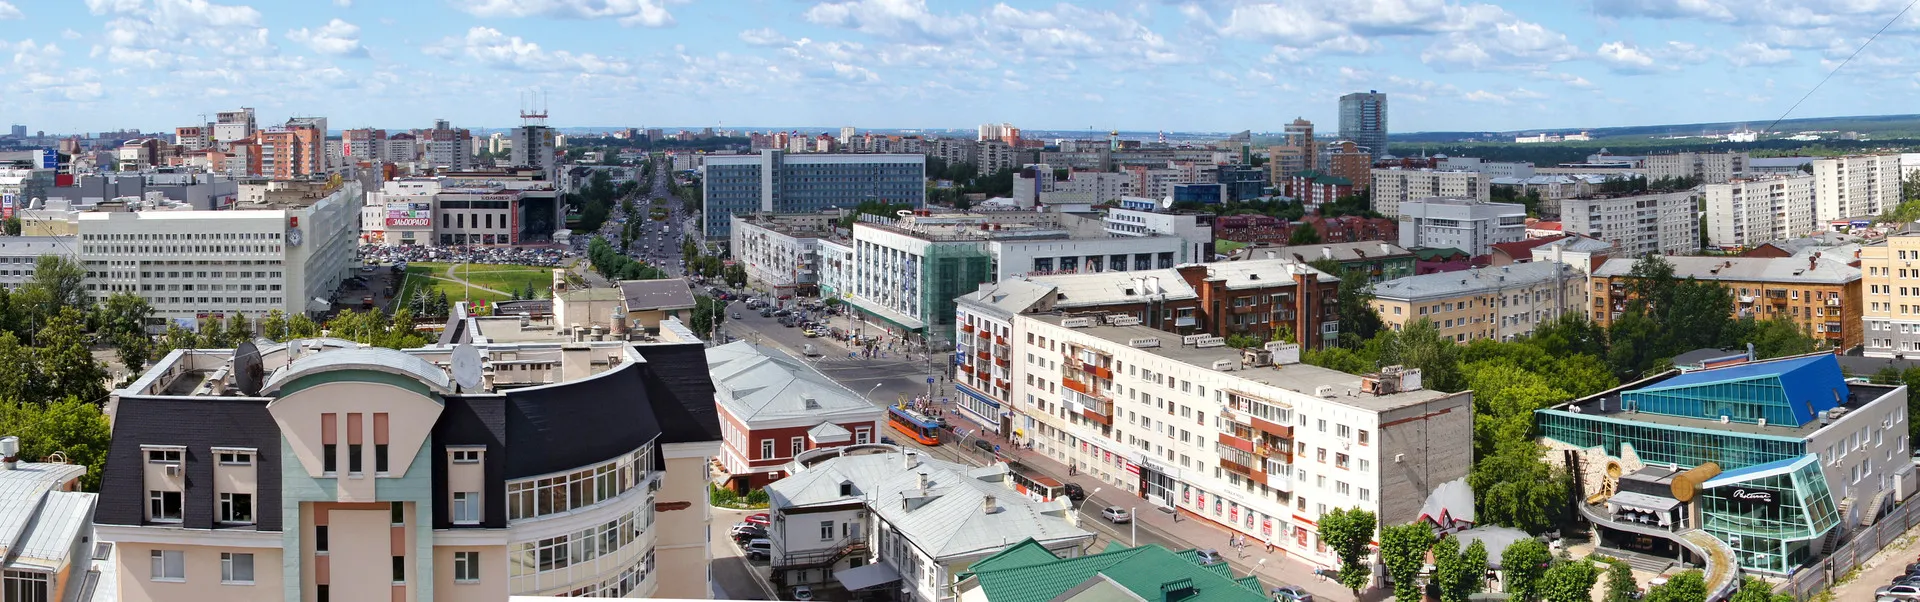 Вид на ул. Ленина (центр города) / View on Lenin Street (the City Center)